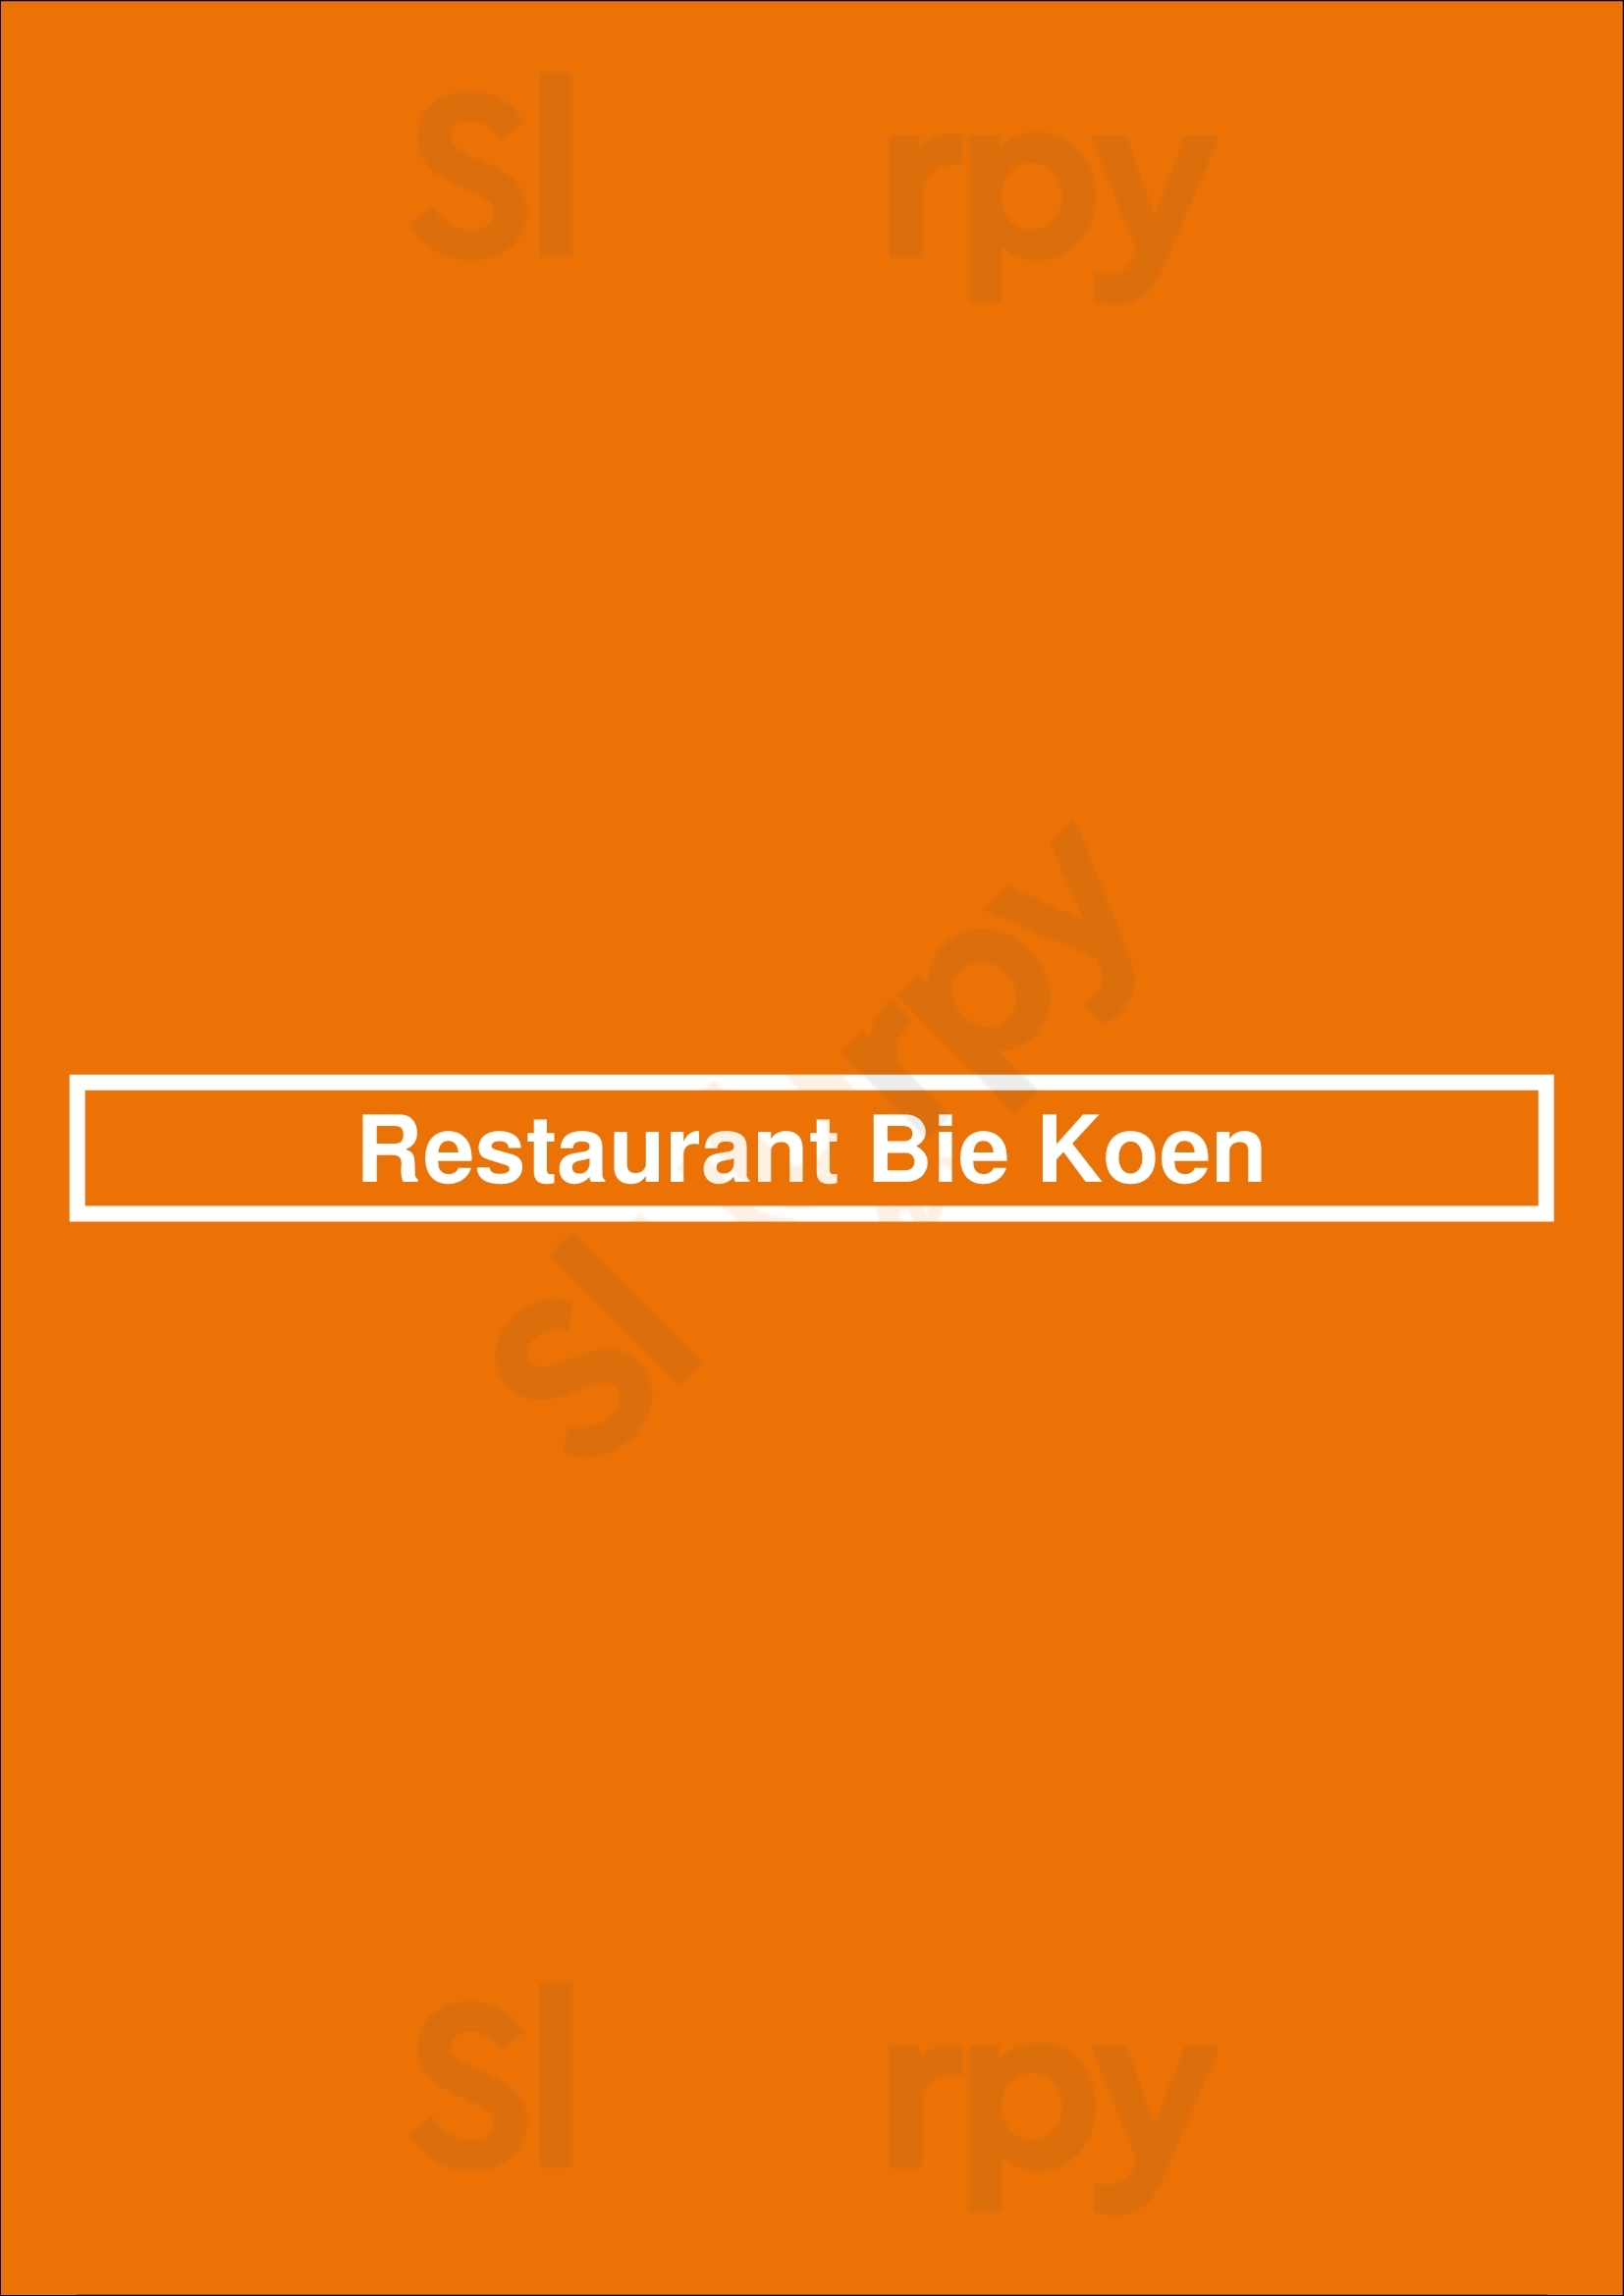 Restaurant Bie Koen Ostende Menu - 1